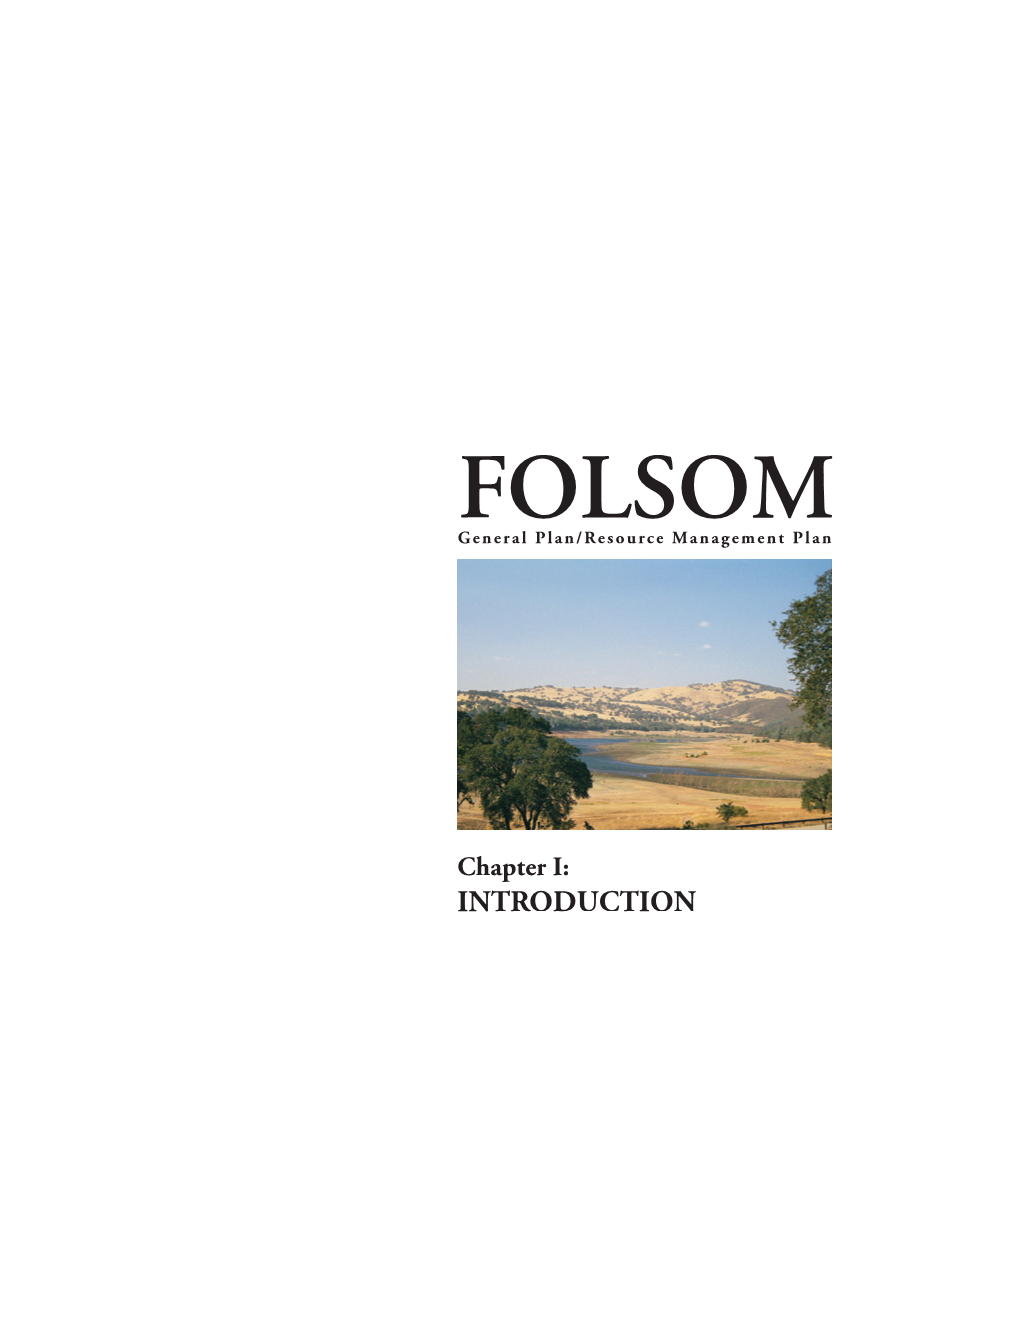 FOLSOM General Plan/Resource Management Plan